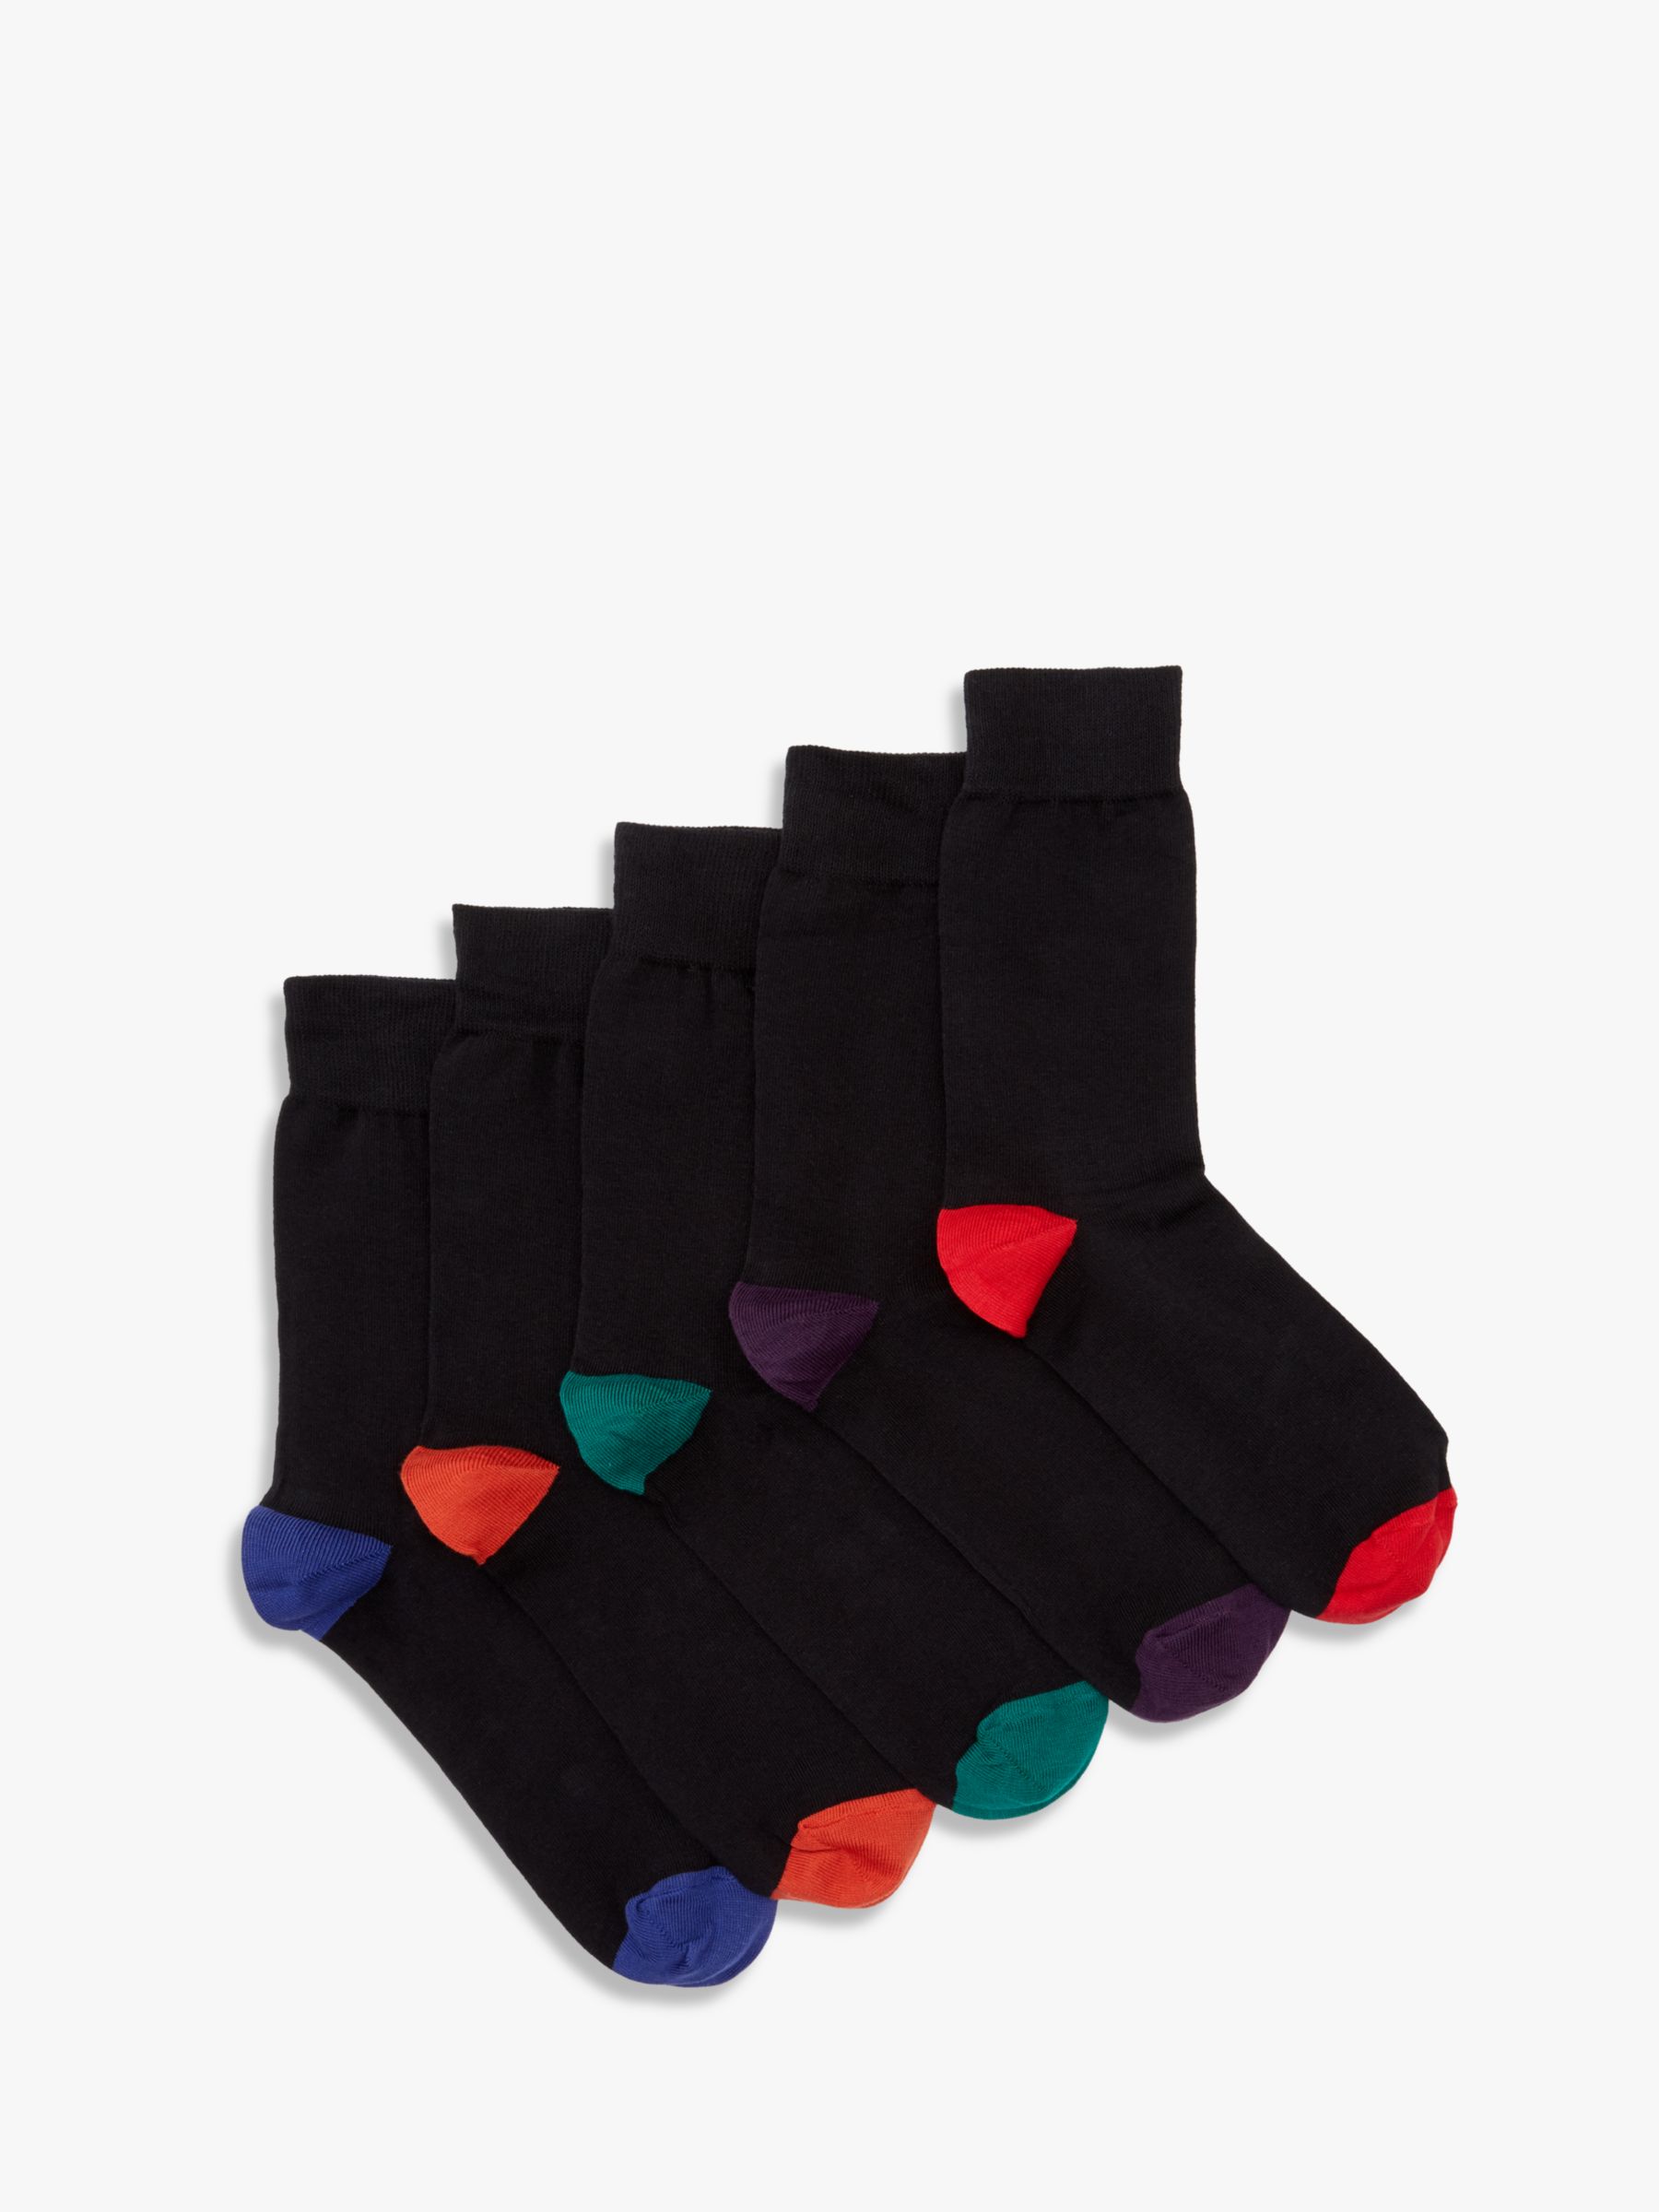 John Lewis & Partners Heel and Toe Socks, Pack of 5, Black, S